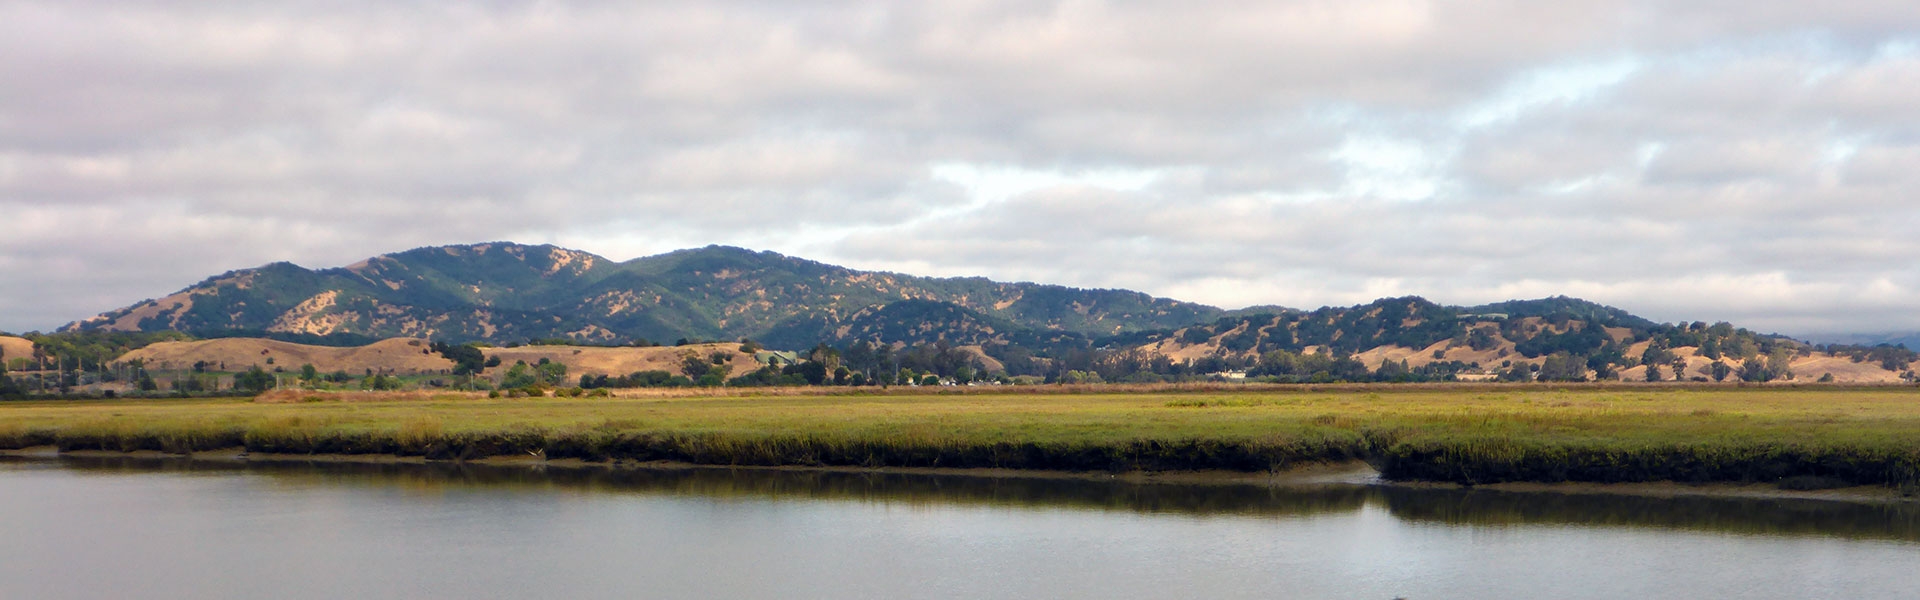 Landscape in San Francisco estuary